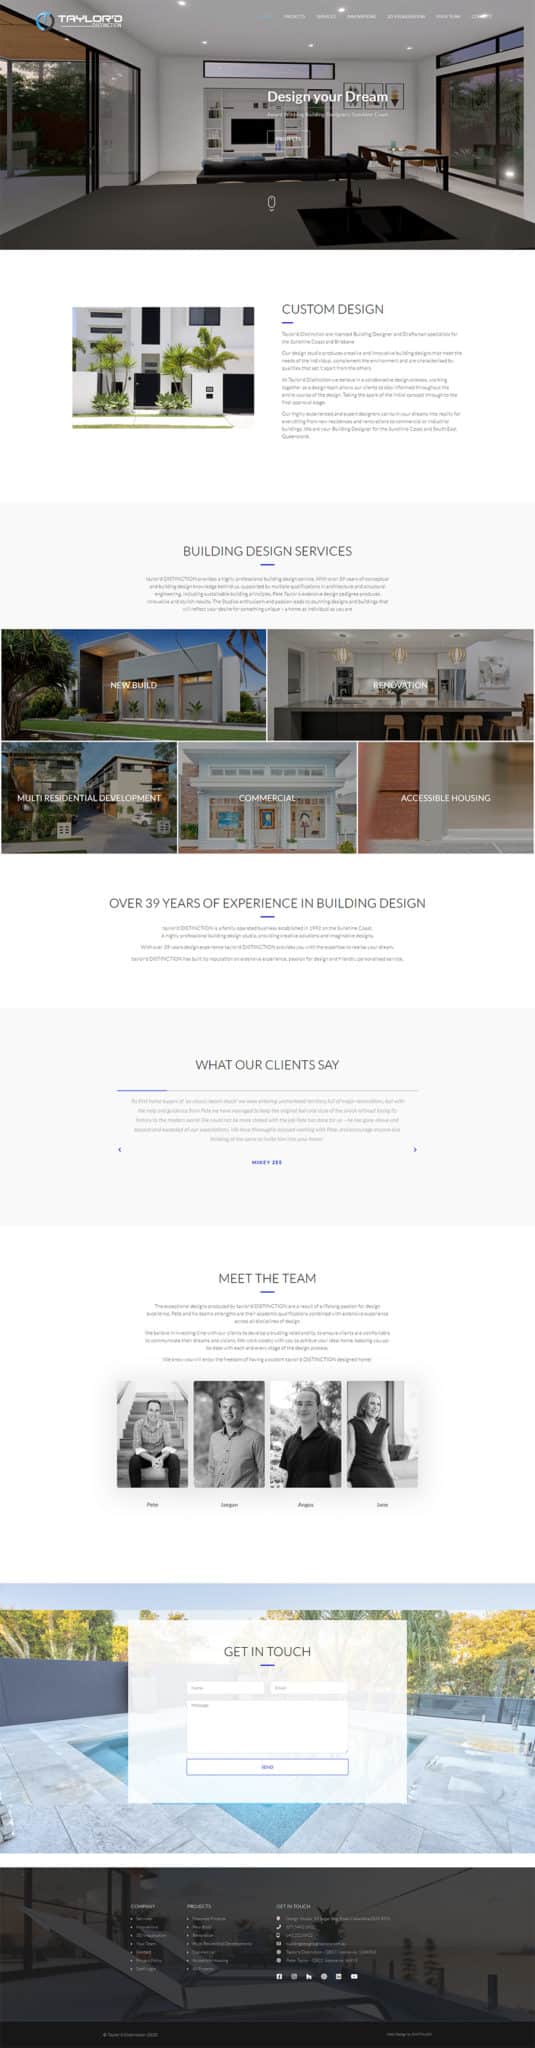 Landing page - Taylord distinction website design by digitalon